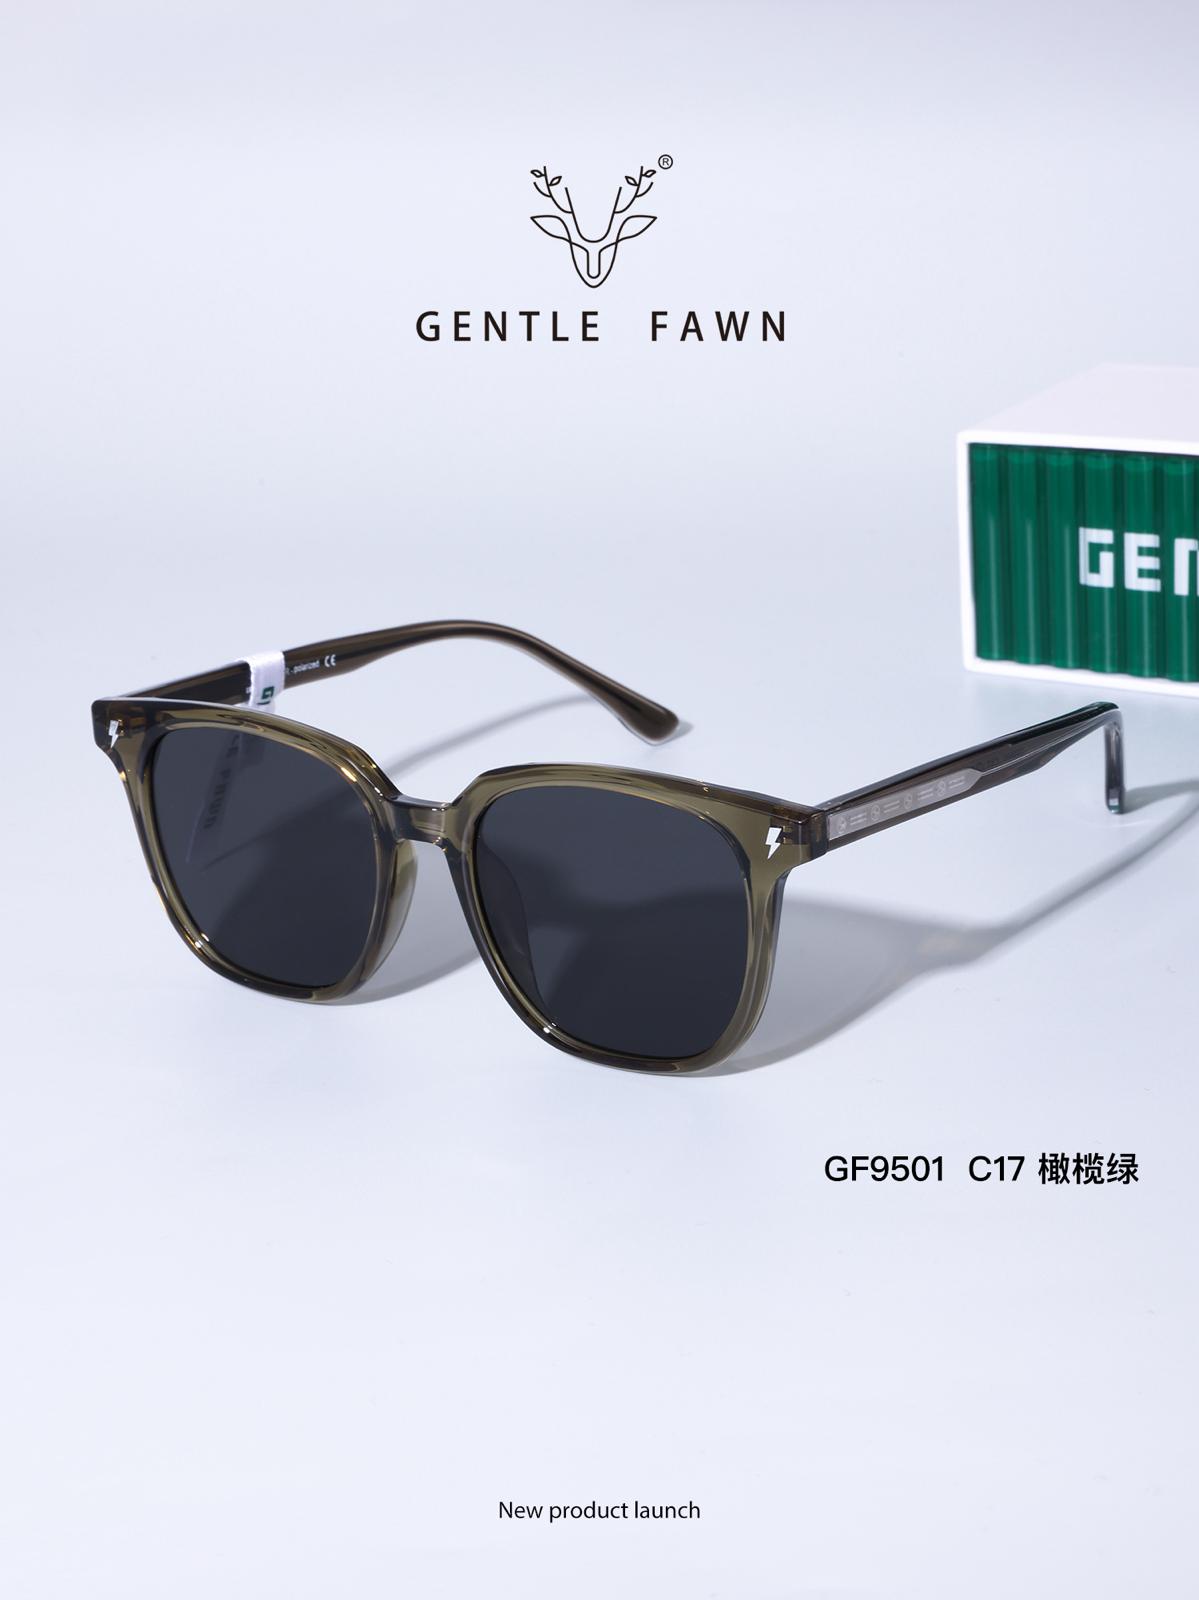 Gentle Fawn Sunglasses Model GZ-GF-9501-C17 (Black & Olive)